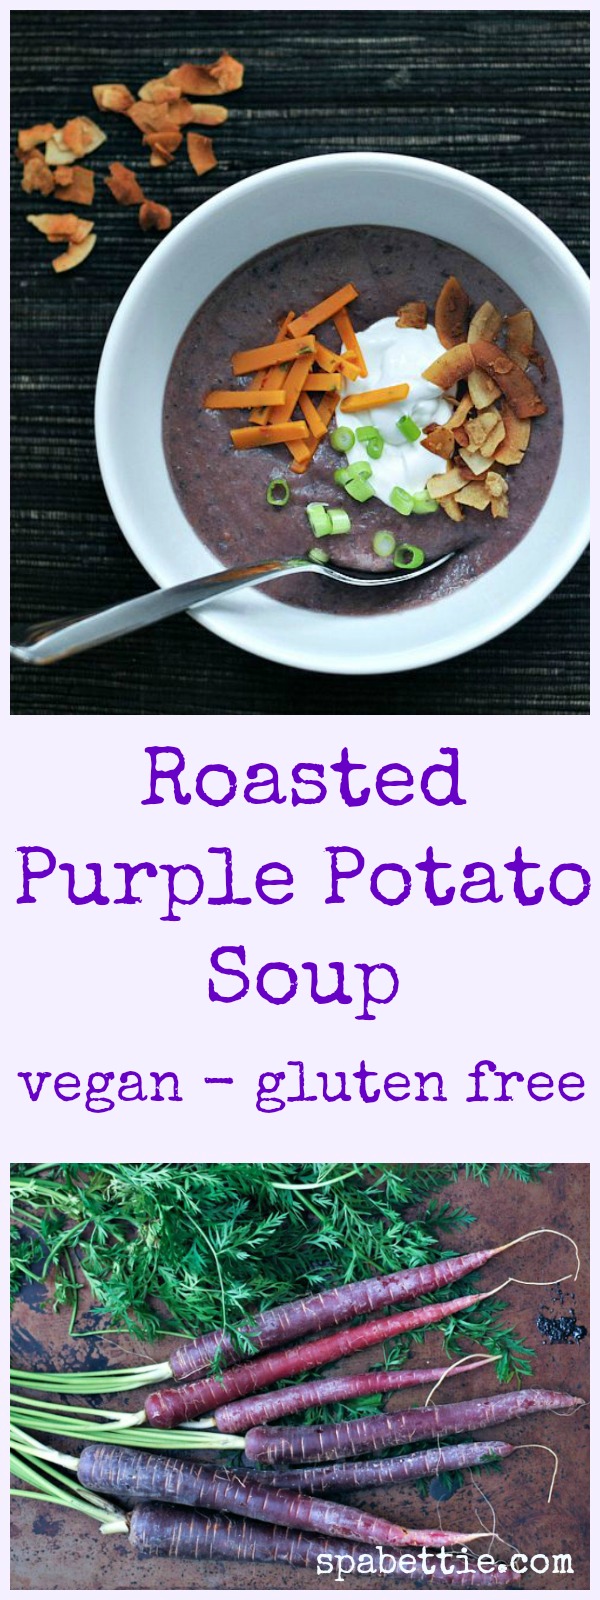 Roasted Purple Potato Soup @spabettie #vegan #glutenfree